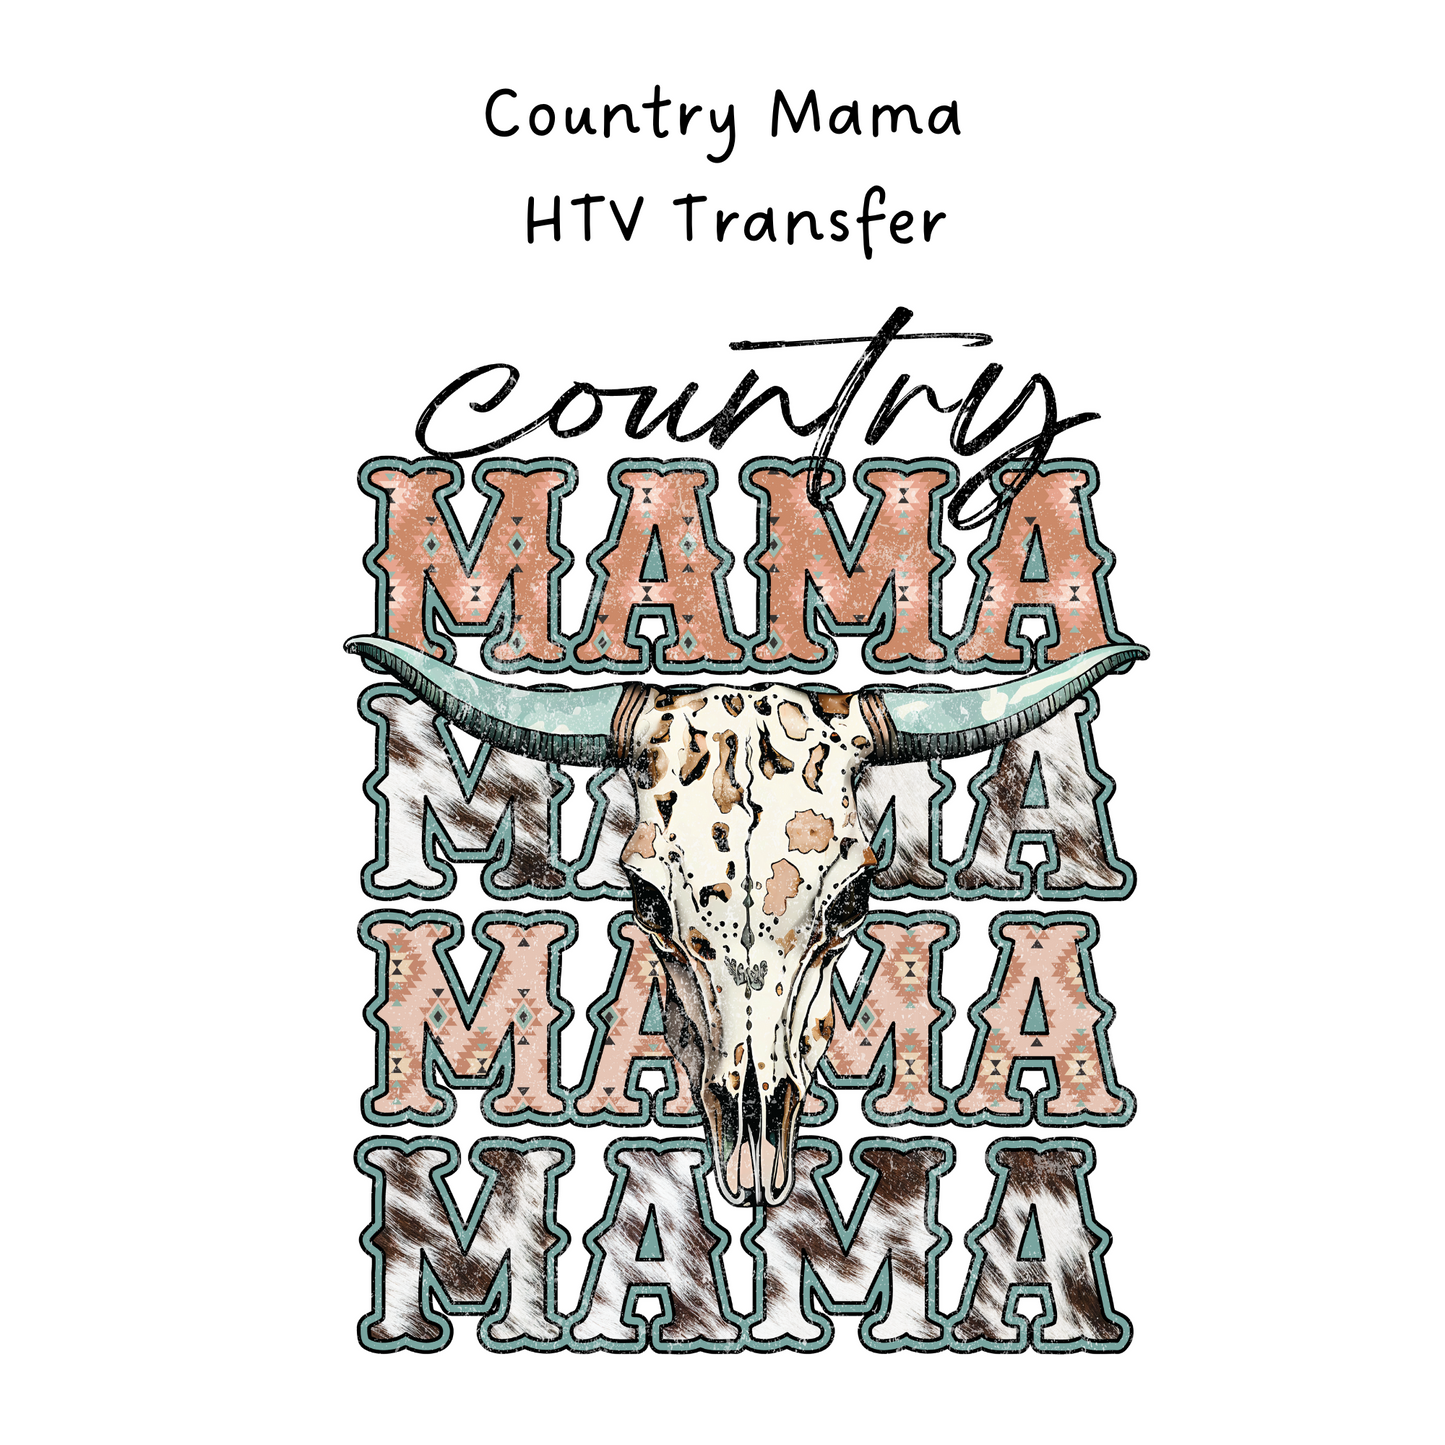 Country Mama HTV Transfer